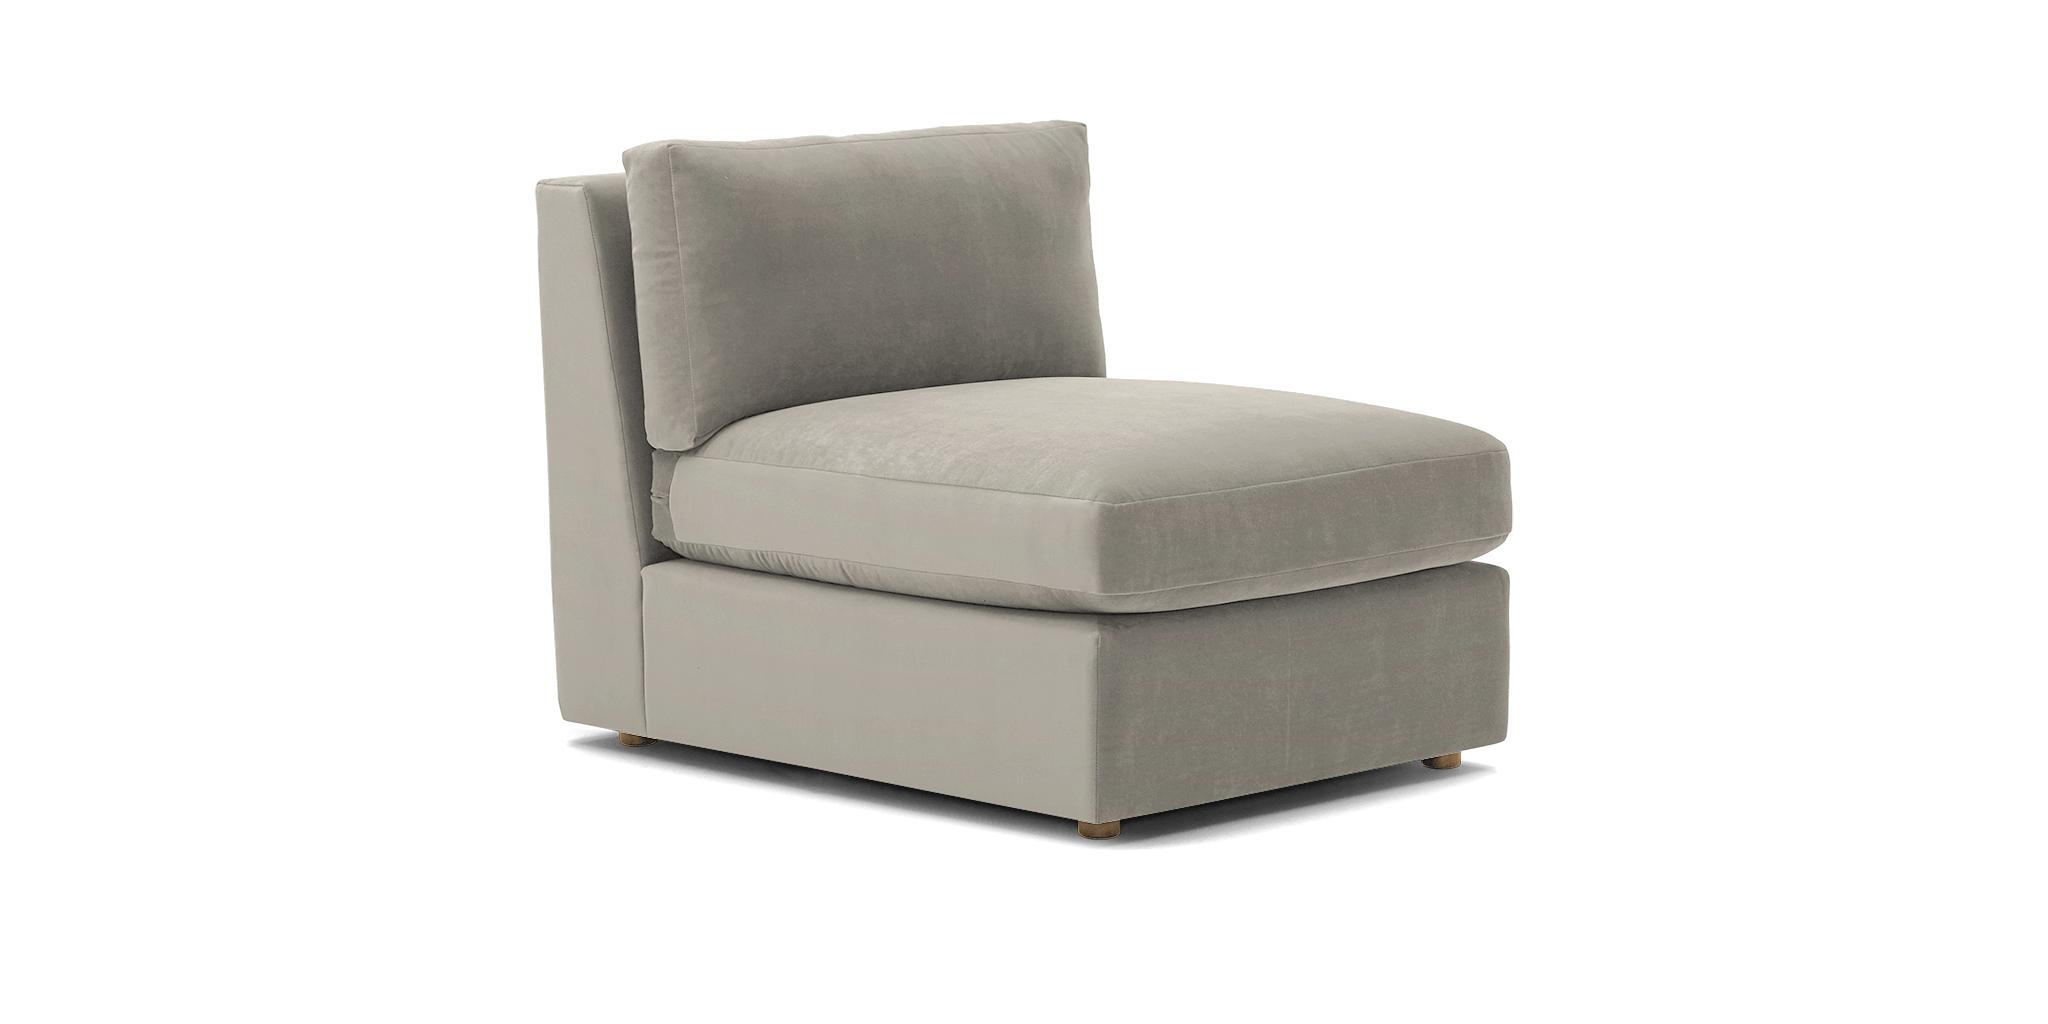 White Daya Mid Century Modern Armless Chair - Bloke Cotton - Image 1